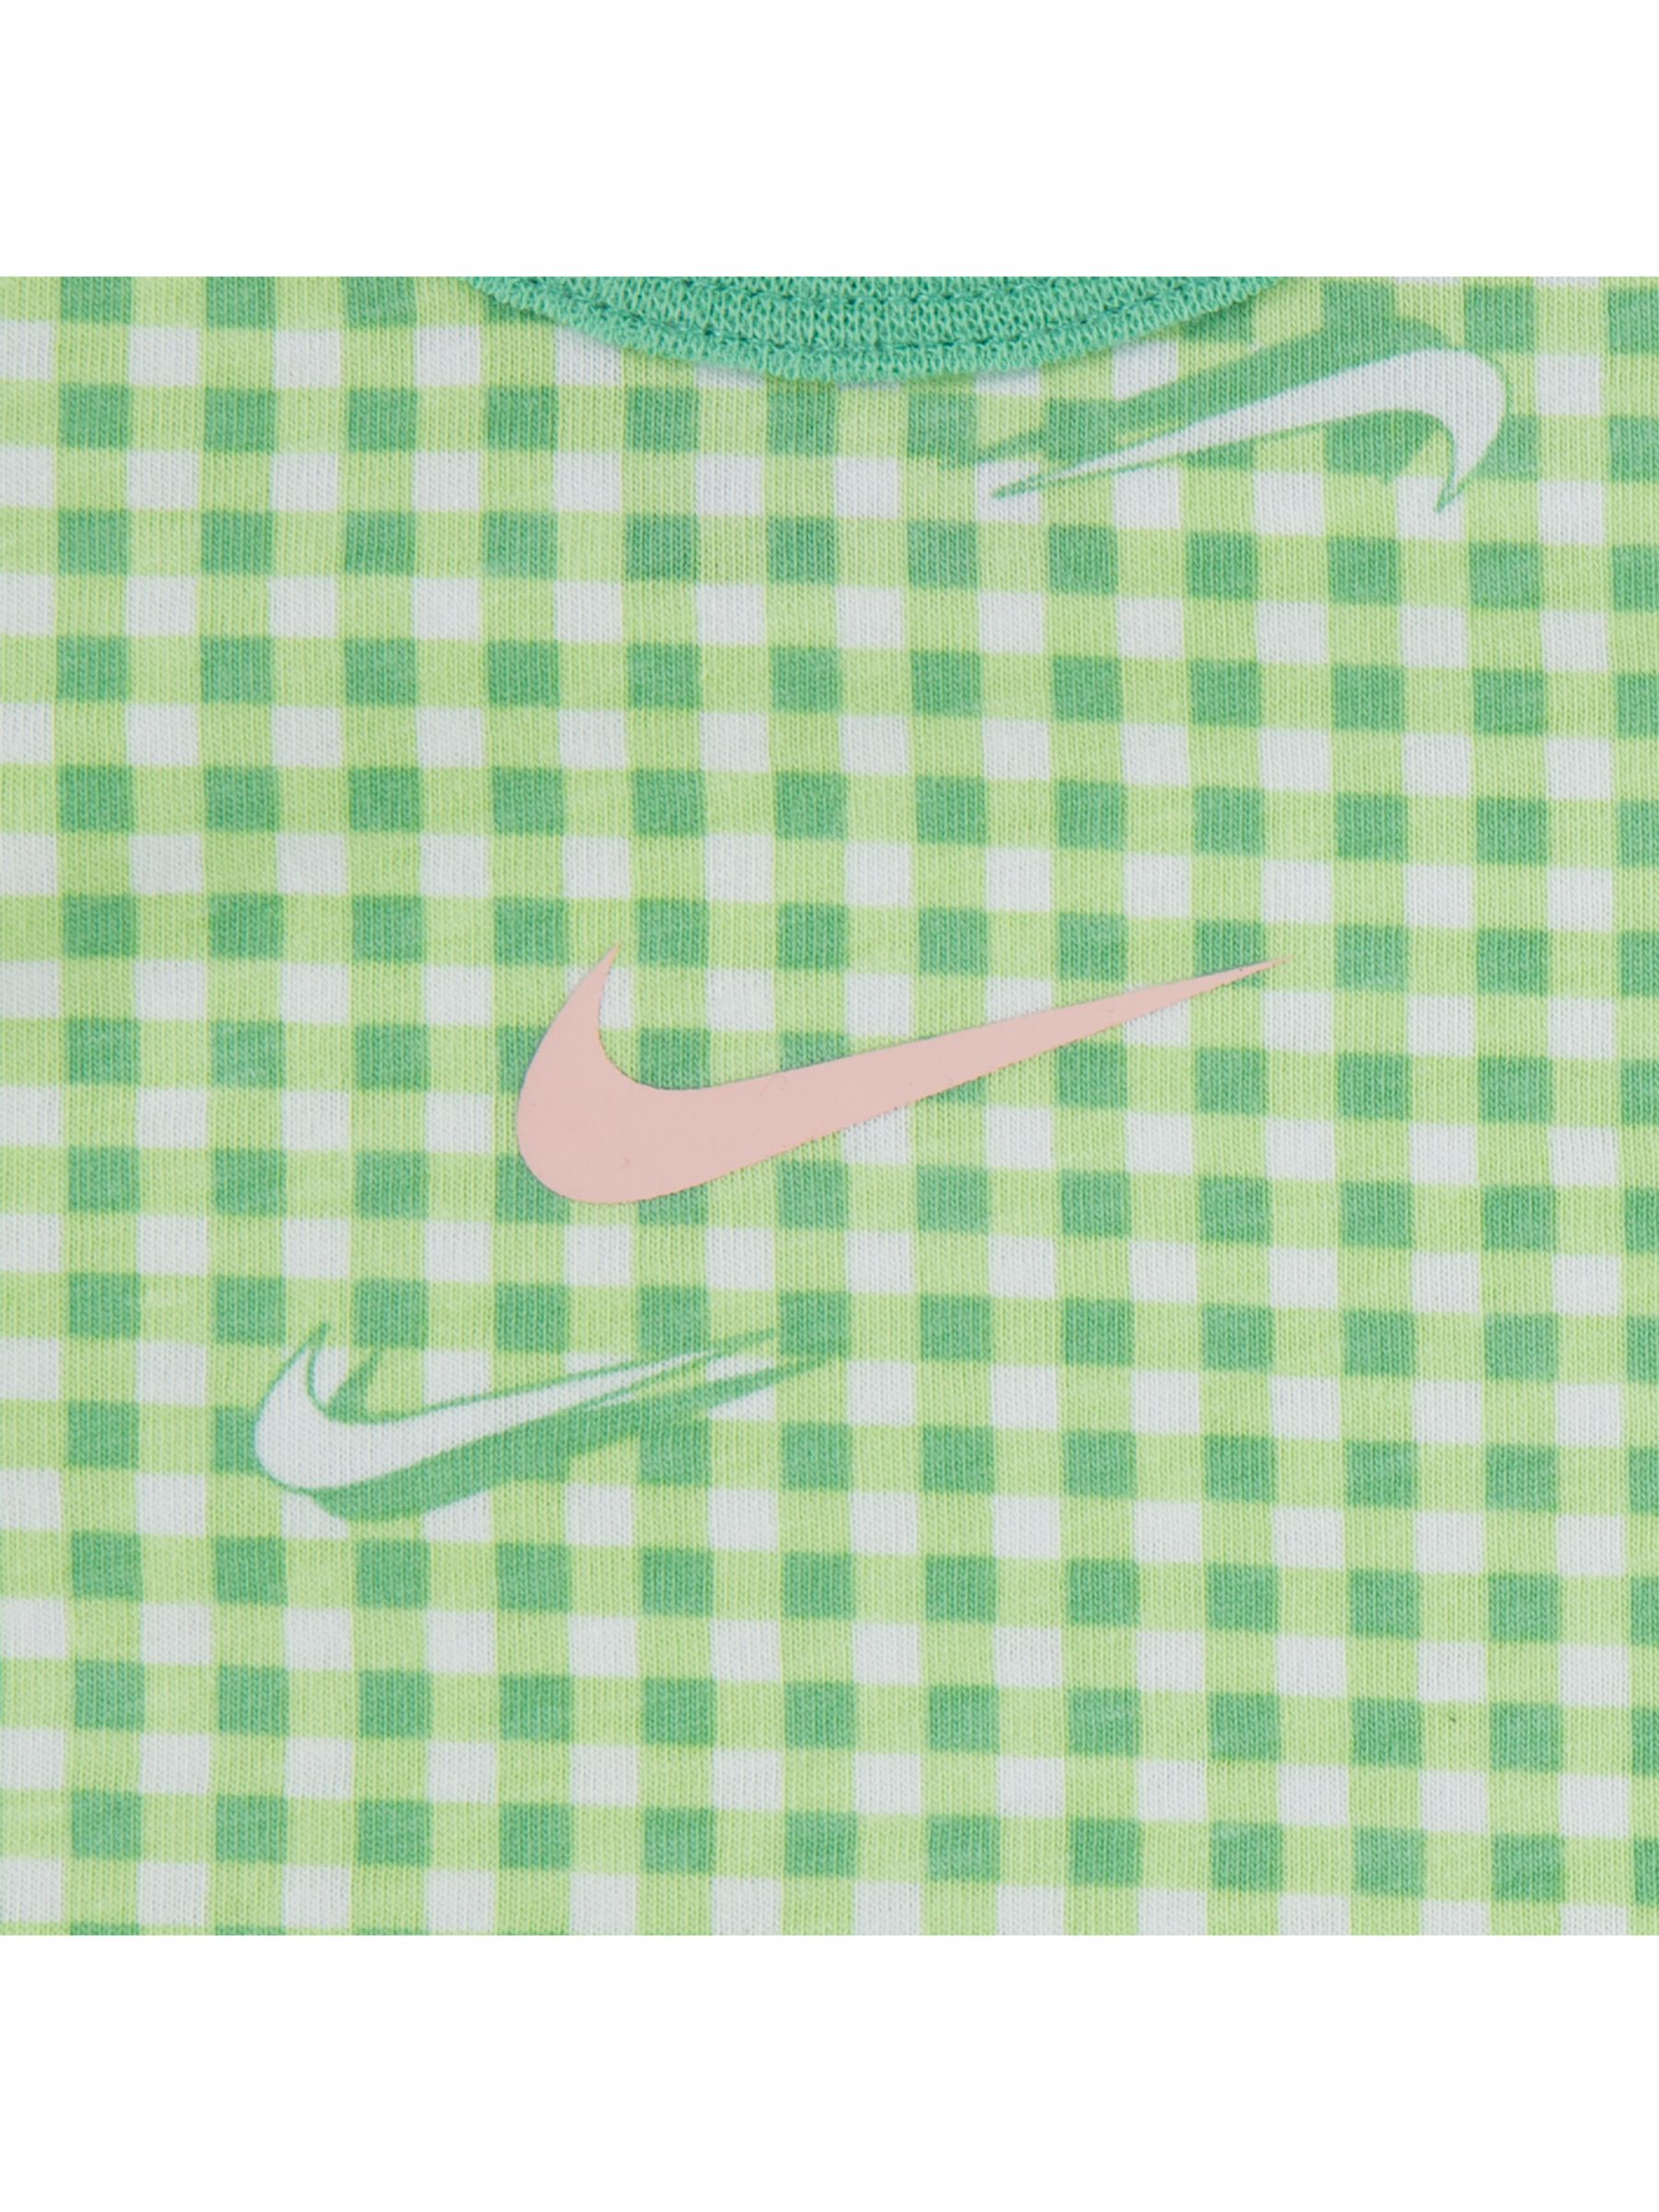 Nike Baby Swoosh Logo Check Print Bodysuits, Pack of 3, Pink Bloom ...